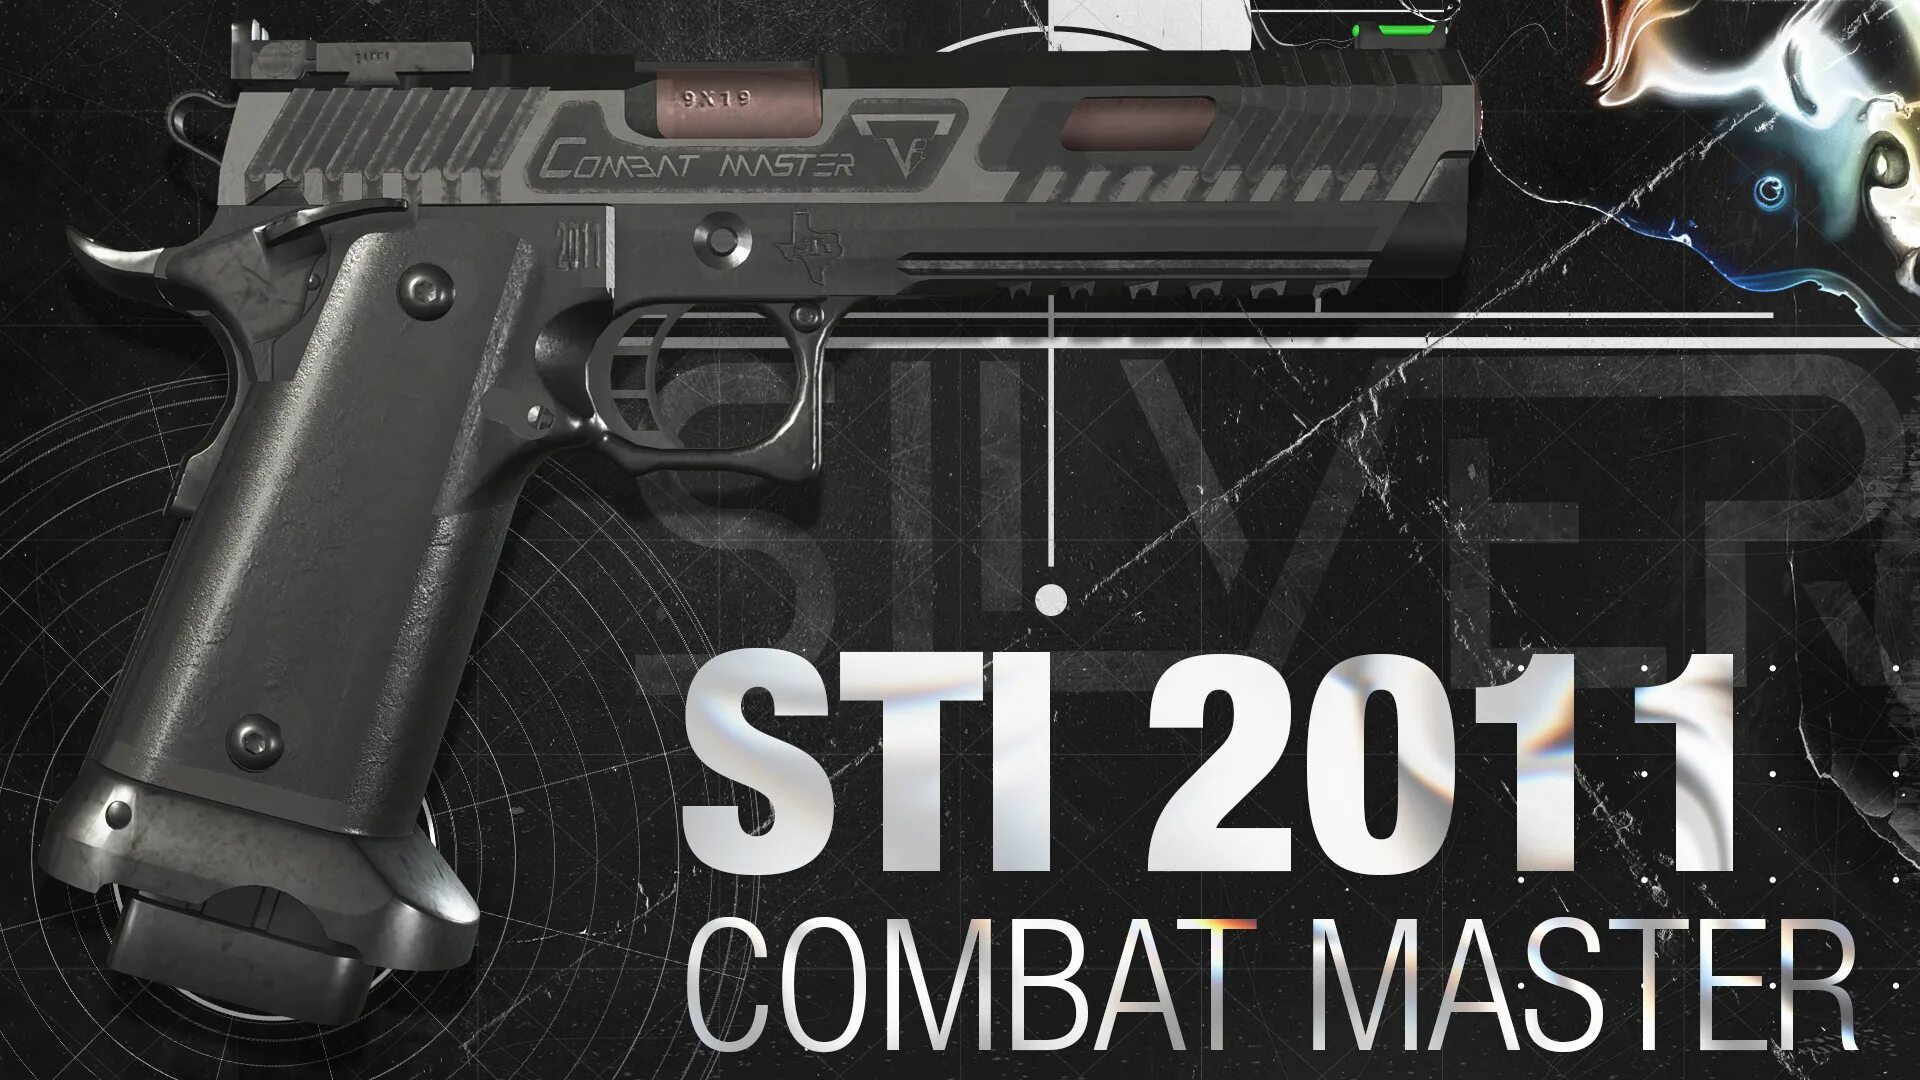 TTI STI 2011 Combat Master. Combat Master 2011 Pistol TTI STI. Combat master 2011